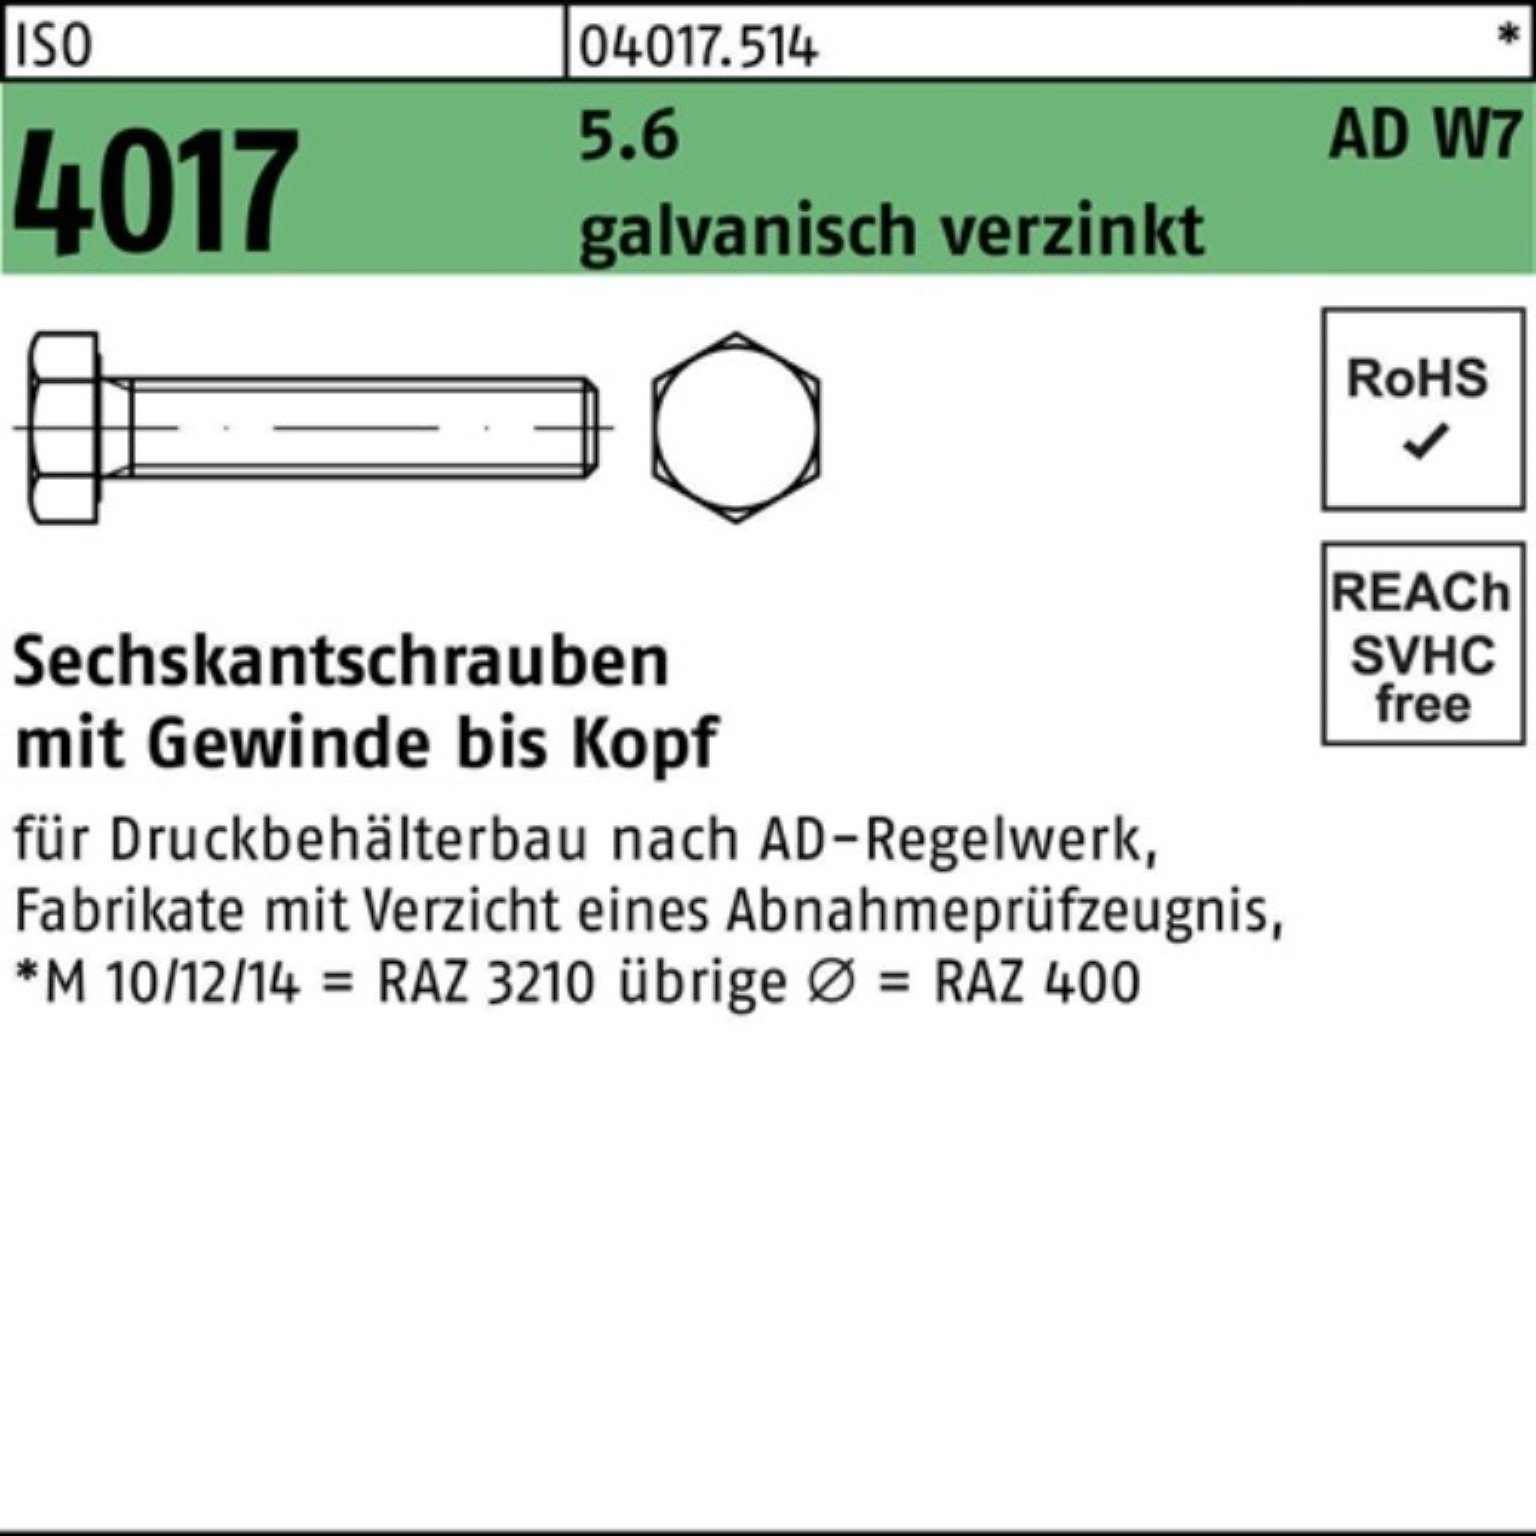 AD 2 W7 M8x galv.verz. 200er 16 Sechskantschraube VG 5.6 Bufab Pack 4017 Sechskantschraube ISO